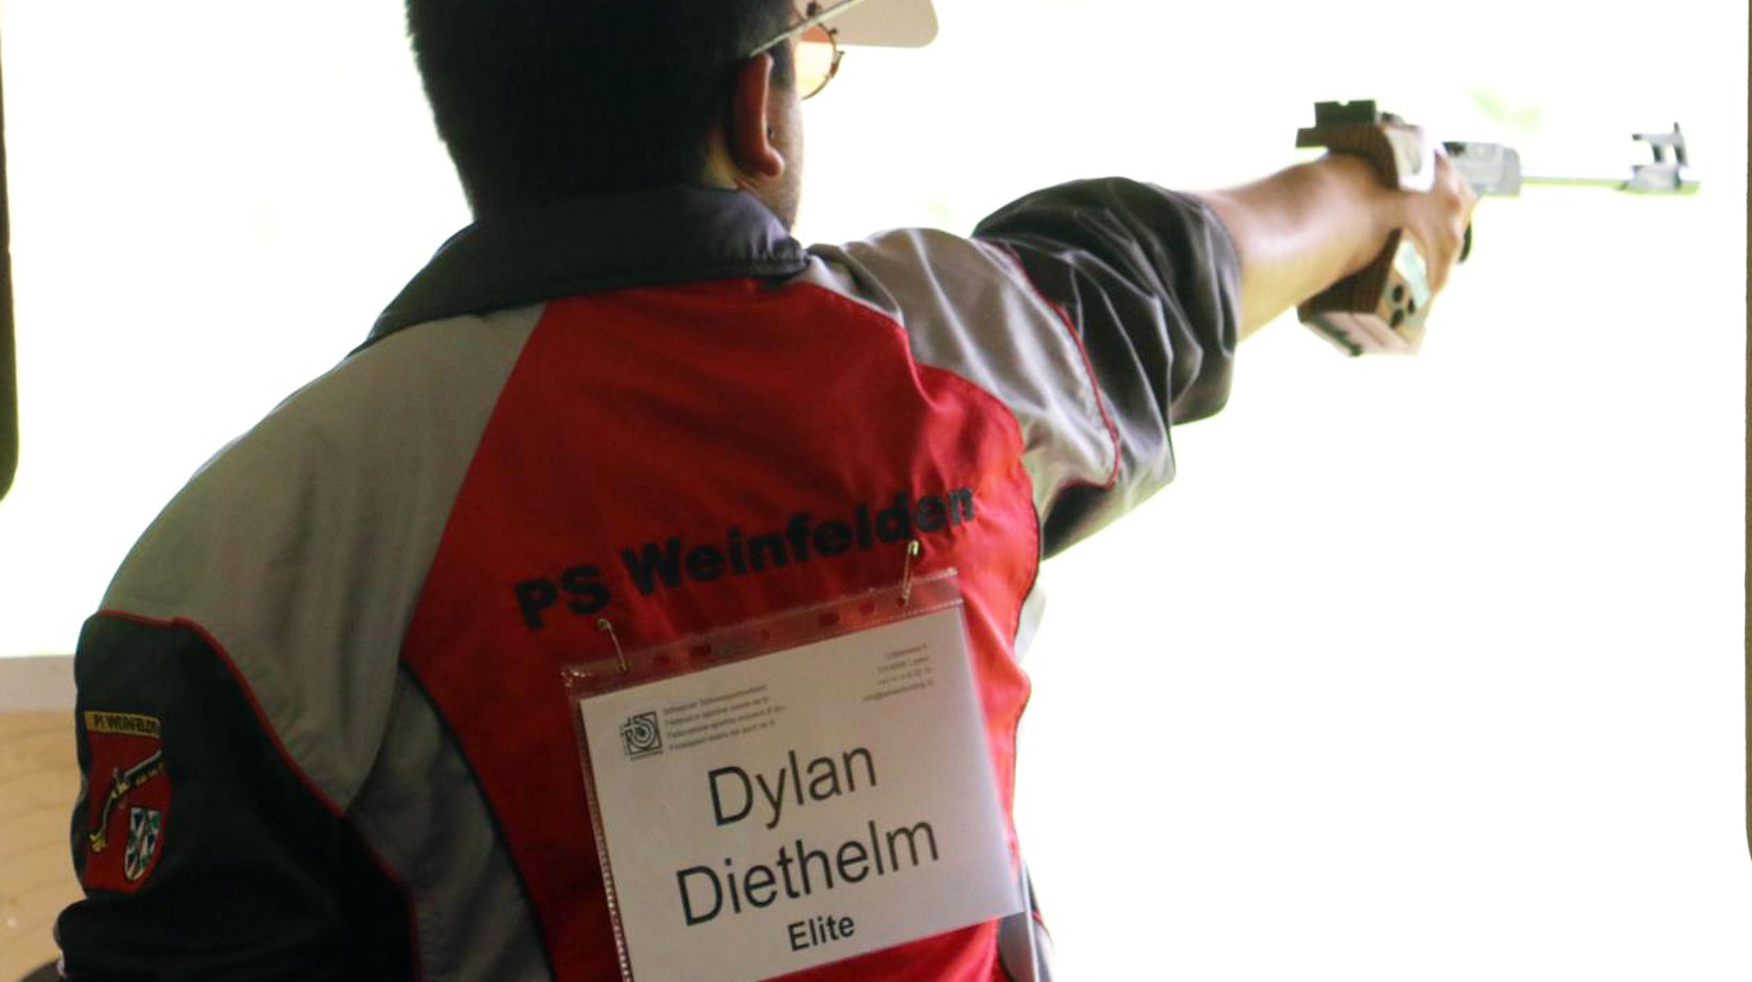 Dylan Diethelm Final EM FP50m 2019.jpg